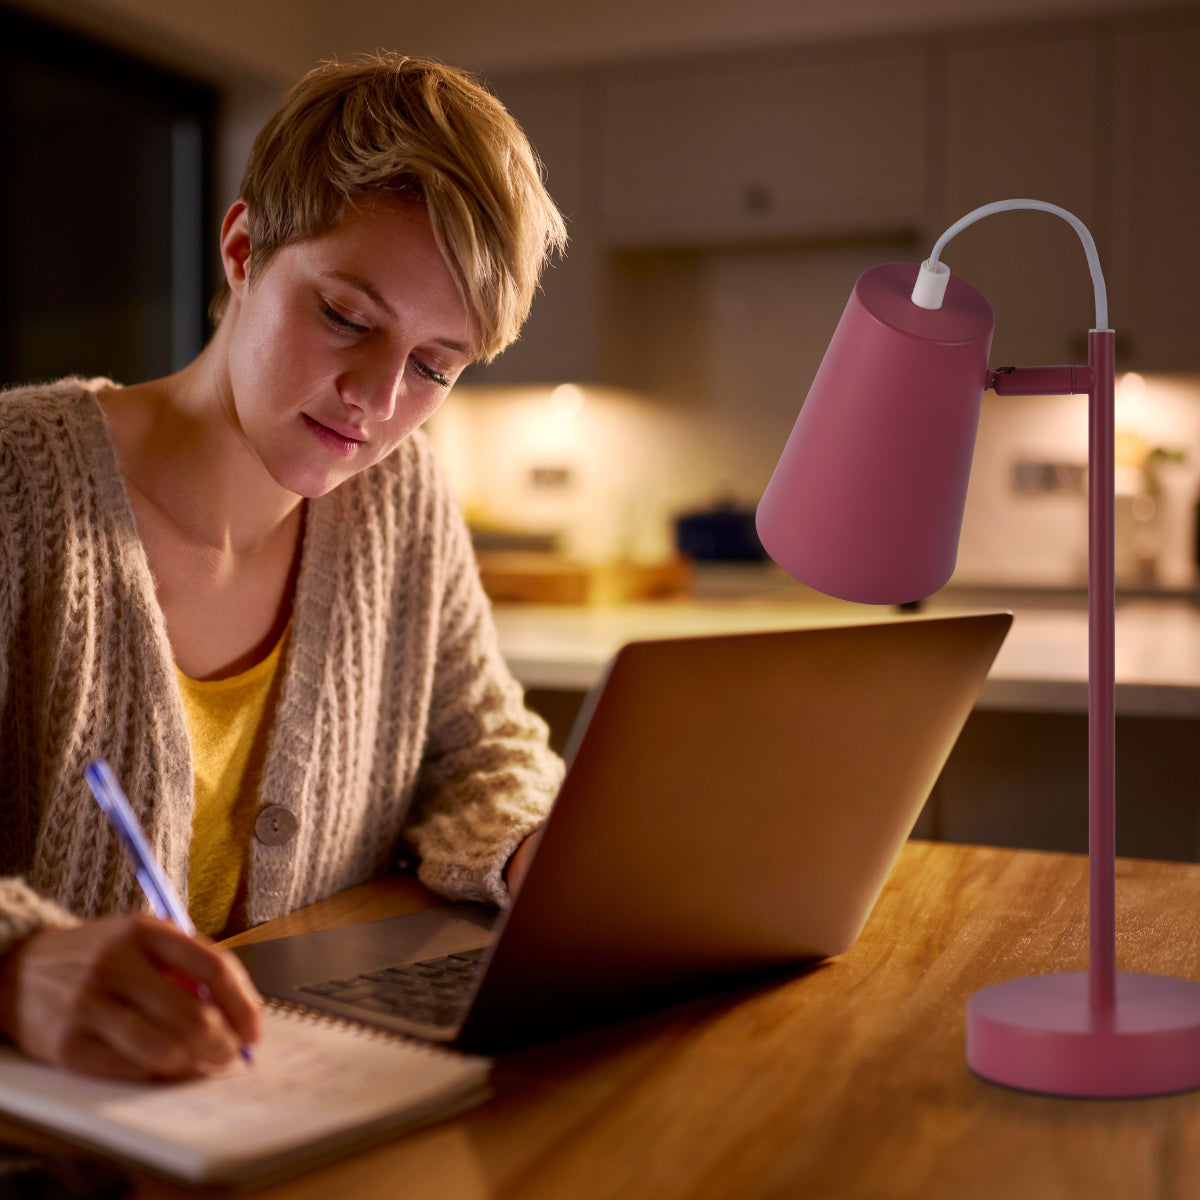 Sleek Cut Cone Desk Lamp in Vibrant Colors - Modern Elegance 130-03672 in play